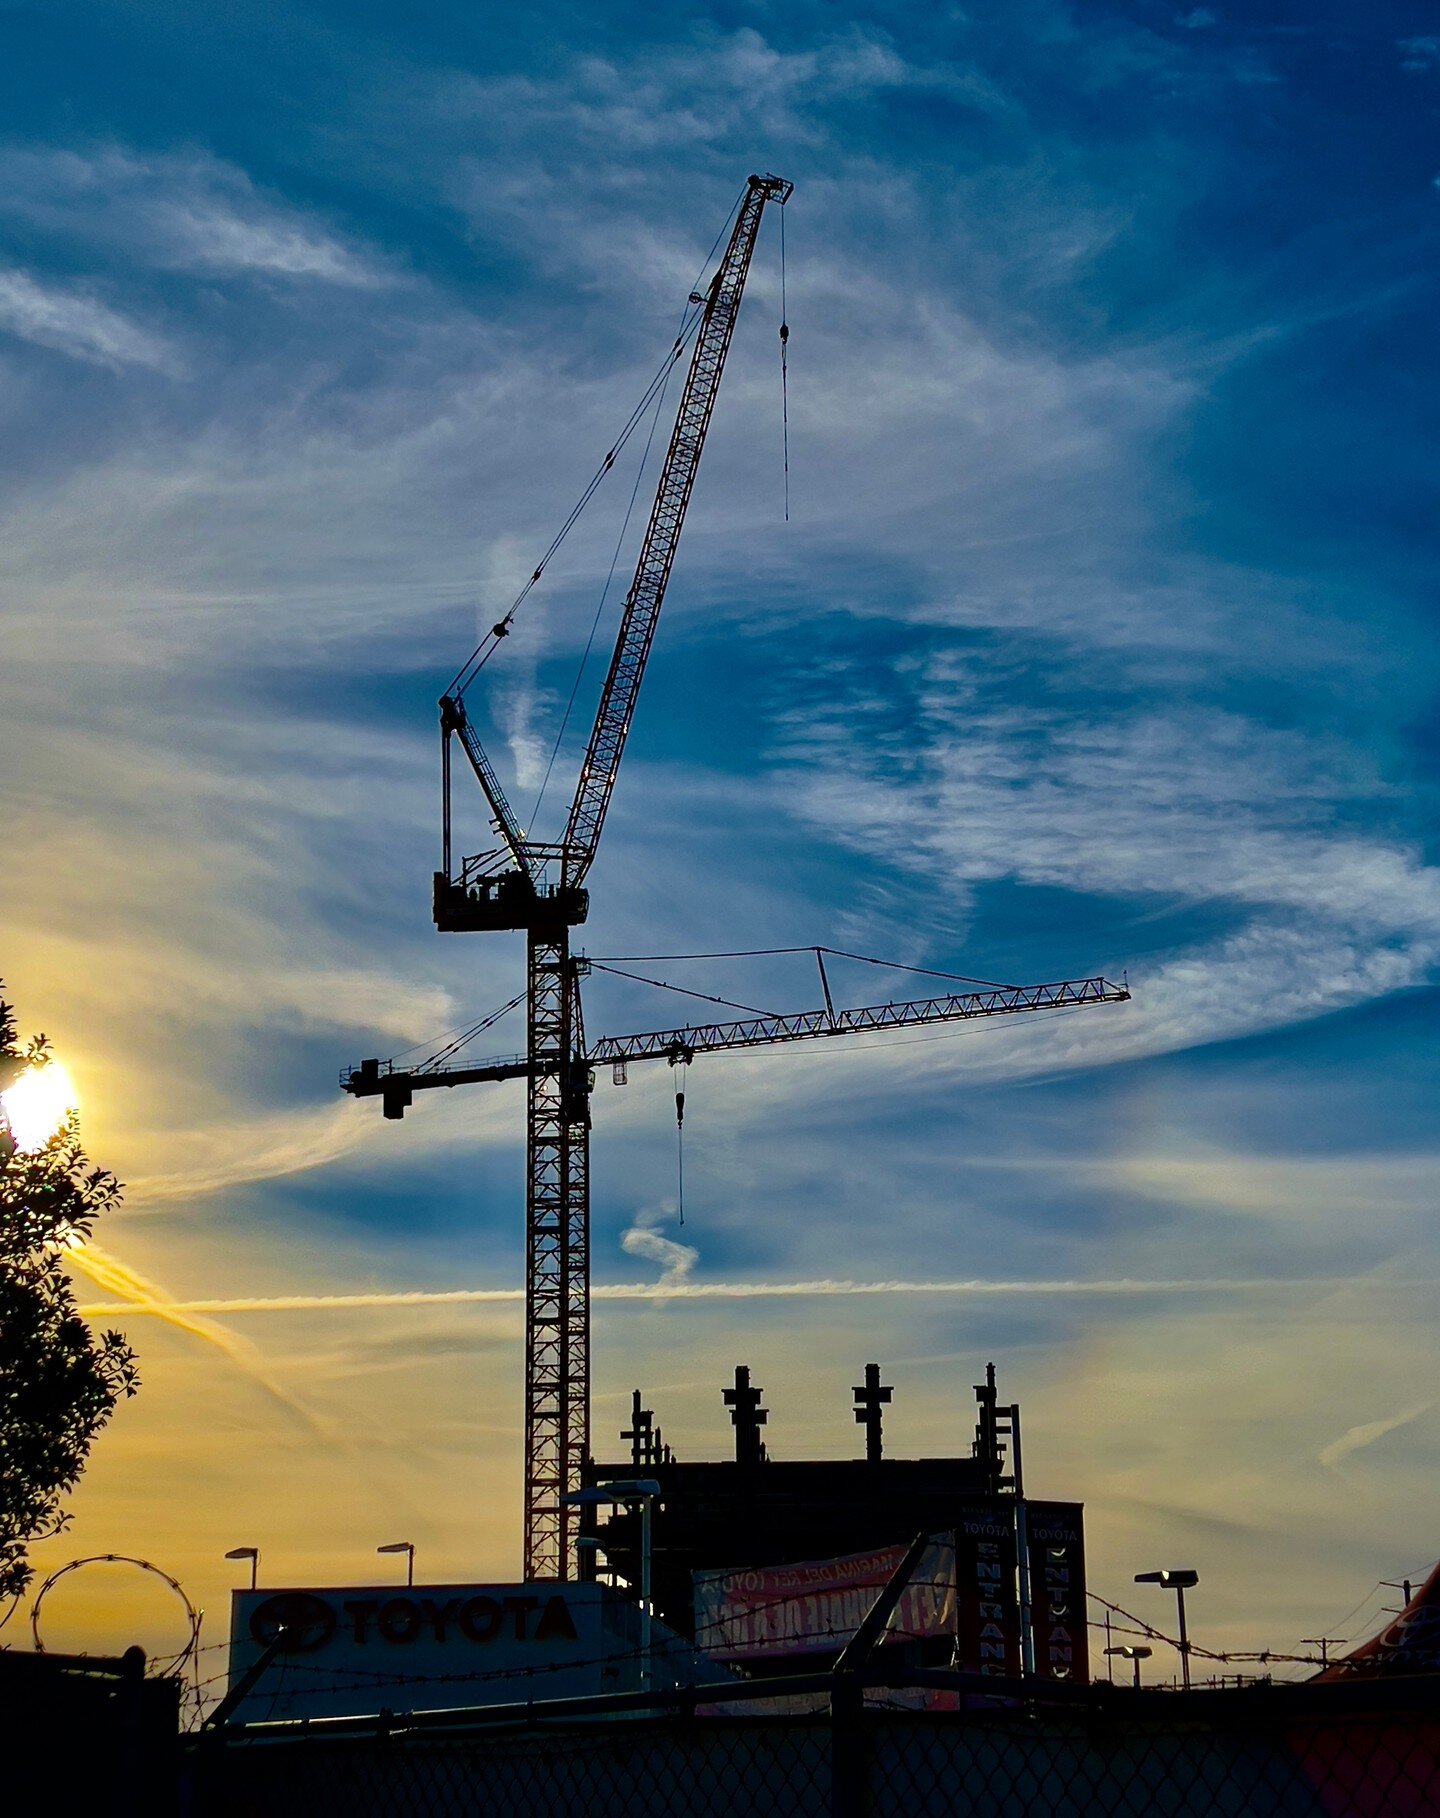 Building Castles In The Sky...
#construction #righttimerightplace #cranes #towercranes #mdr #marinadelrey #sunrise #sunrisephotography